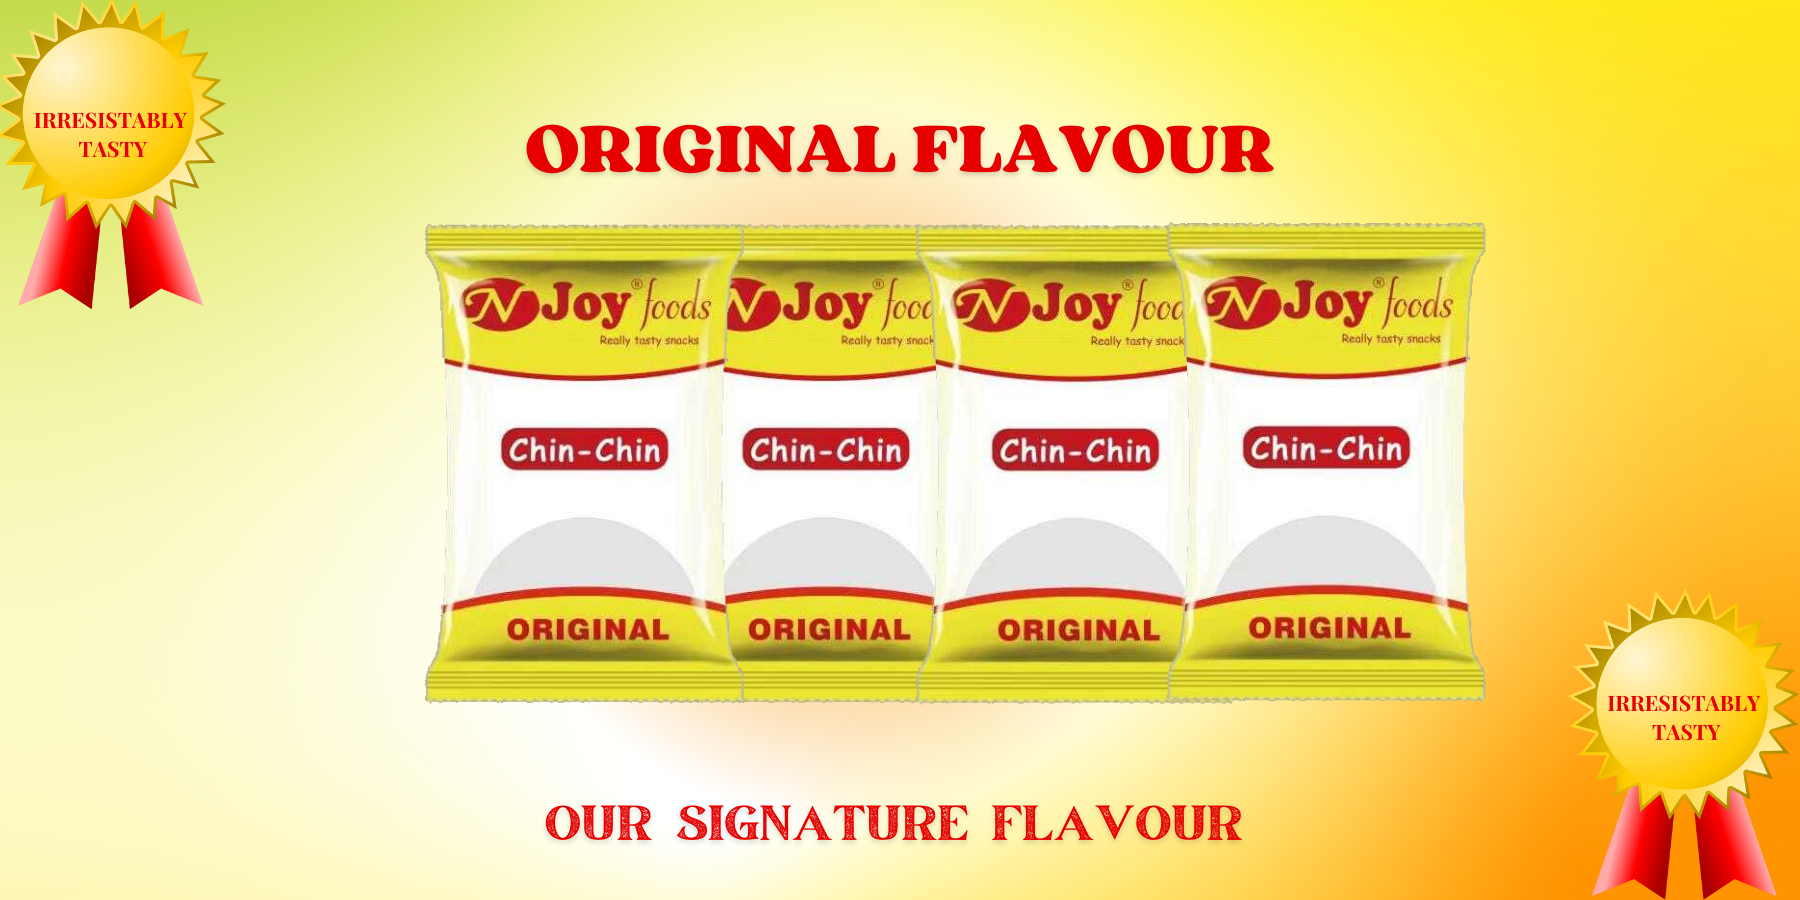 Njoy chinchin original flavour